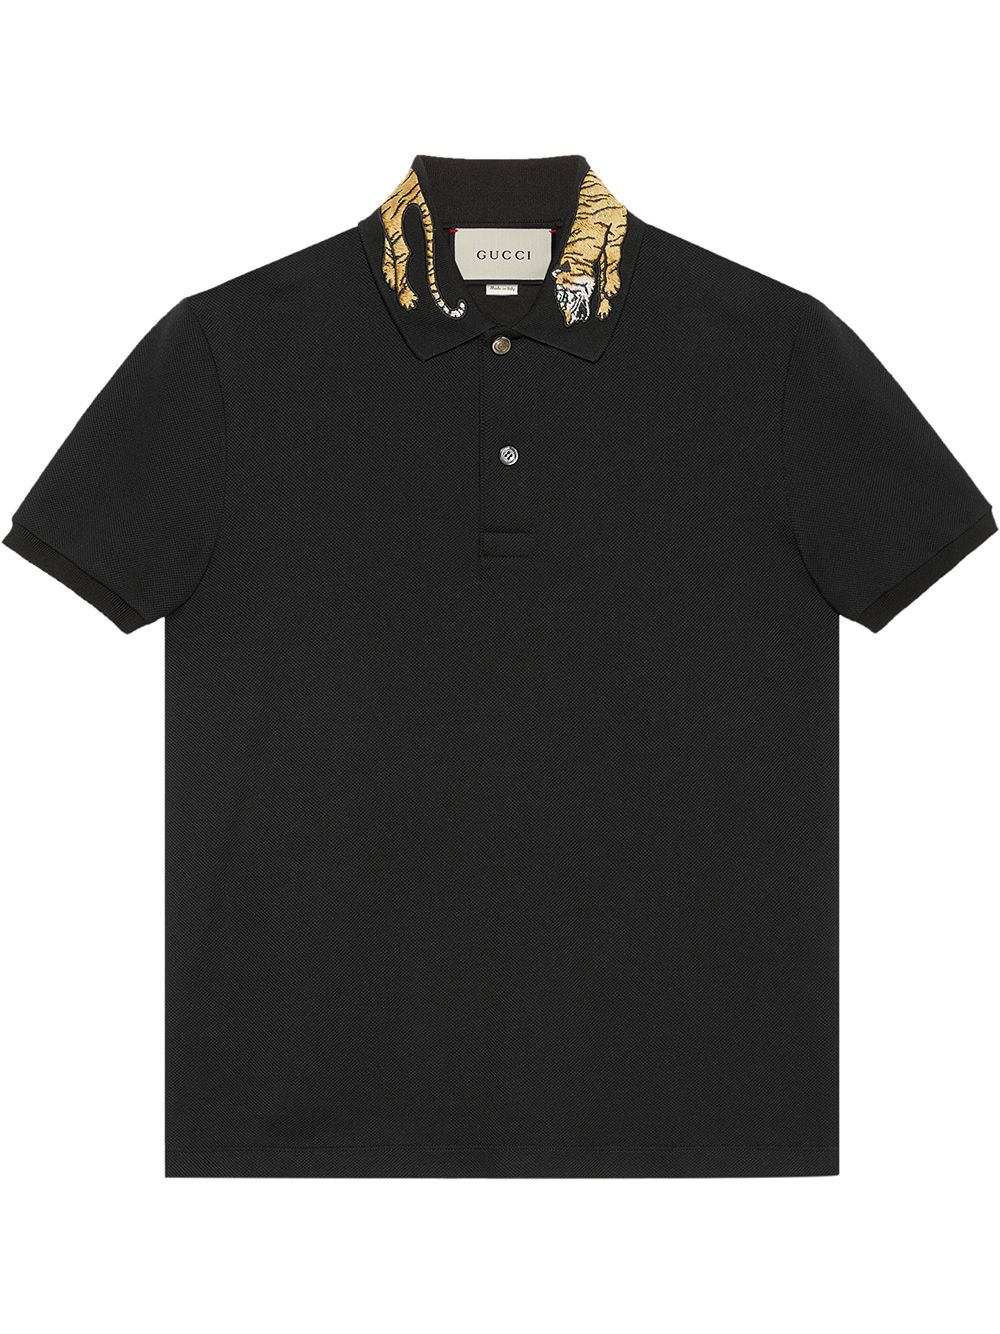 Gucci Tiger Embroidered Polo Shirt - Farfetch